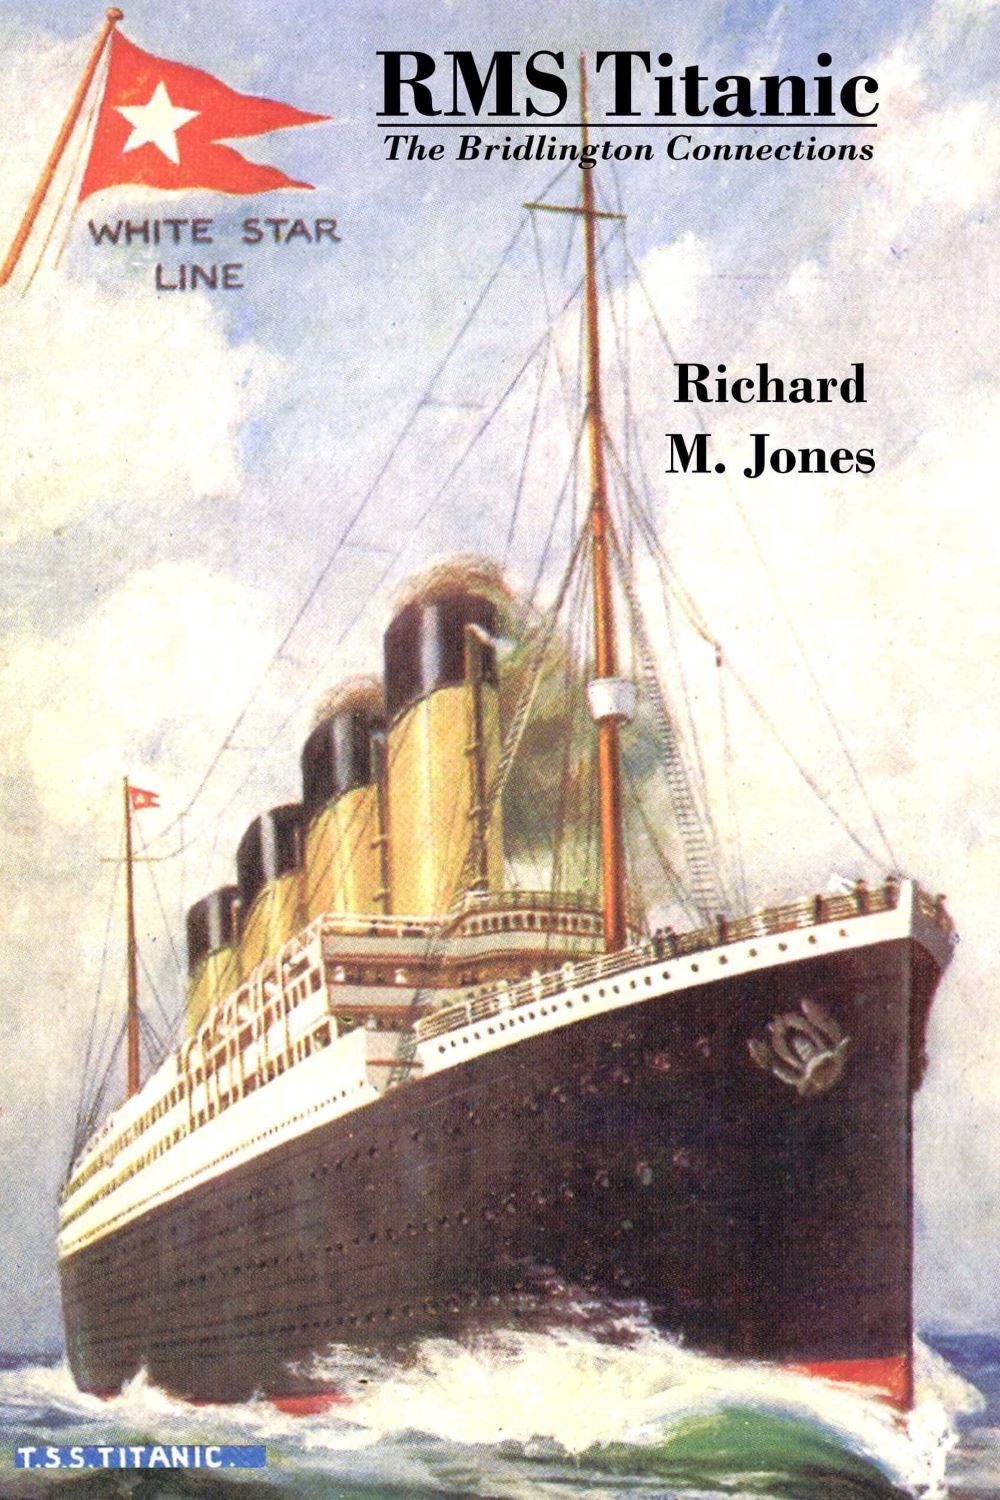 Book review: RMS Titanic: The Bridlington Connections by Richard M Jones